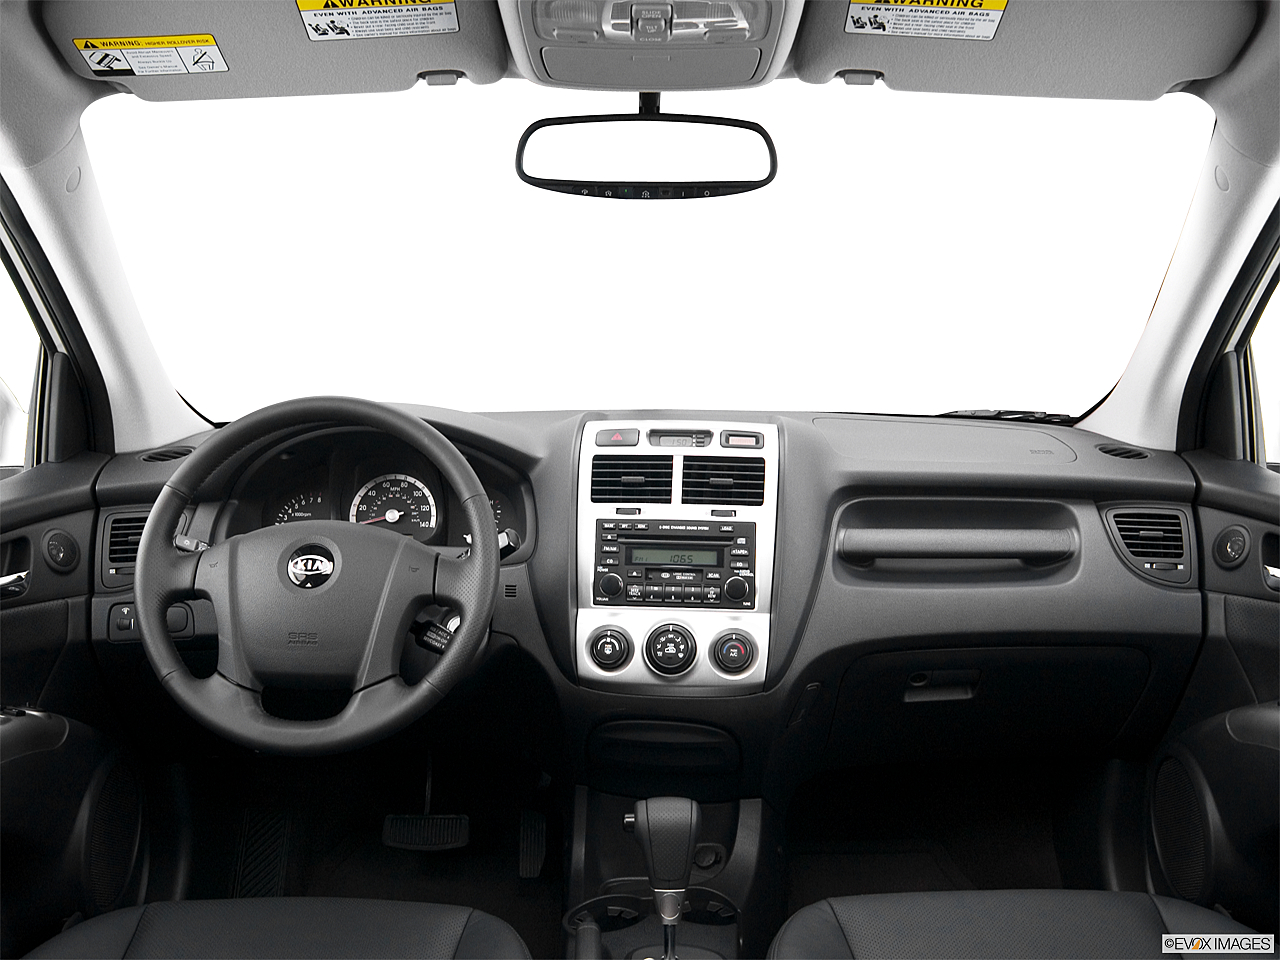 2005 Kia Sportage AWD EX 4dr SUV - Research - GrooveCar